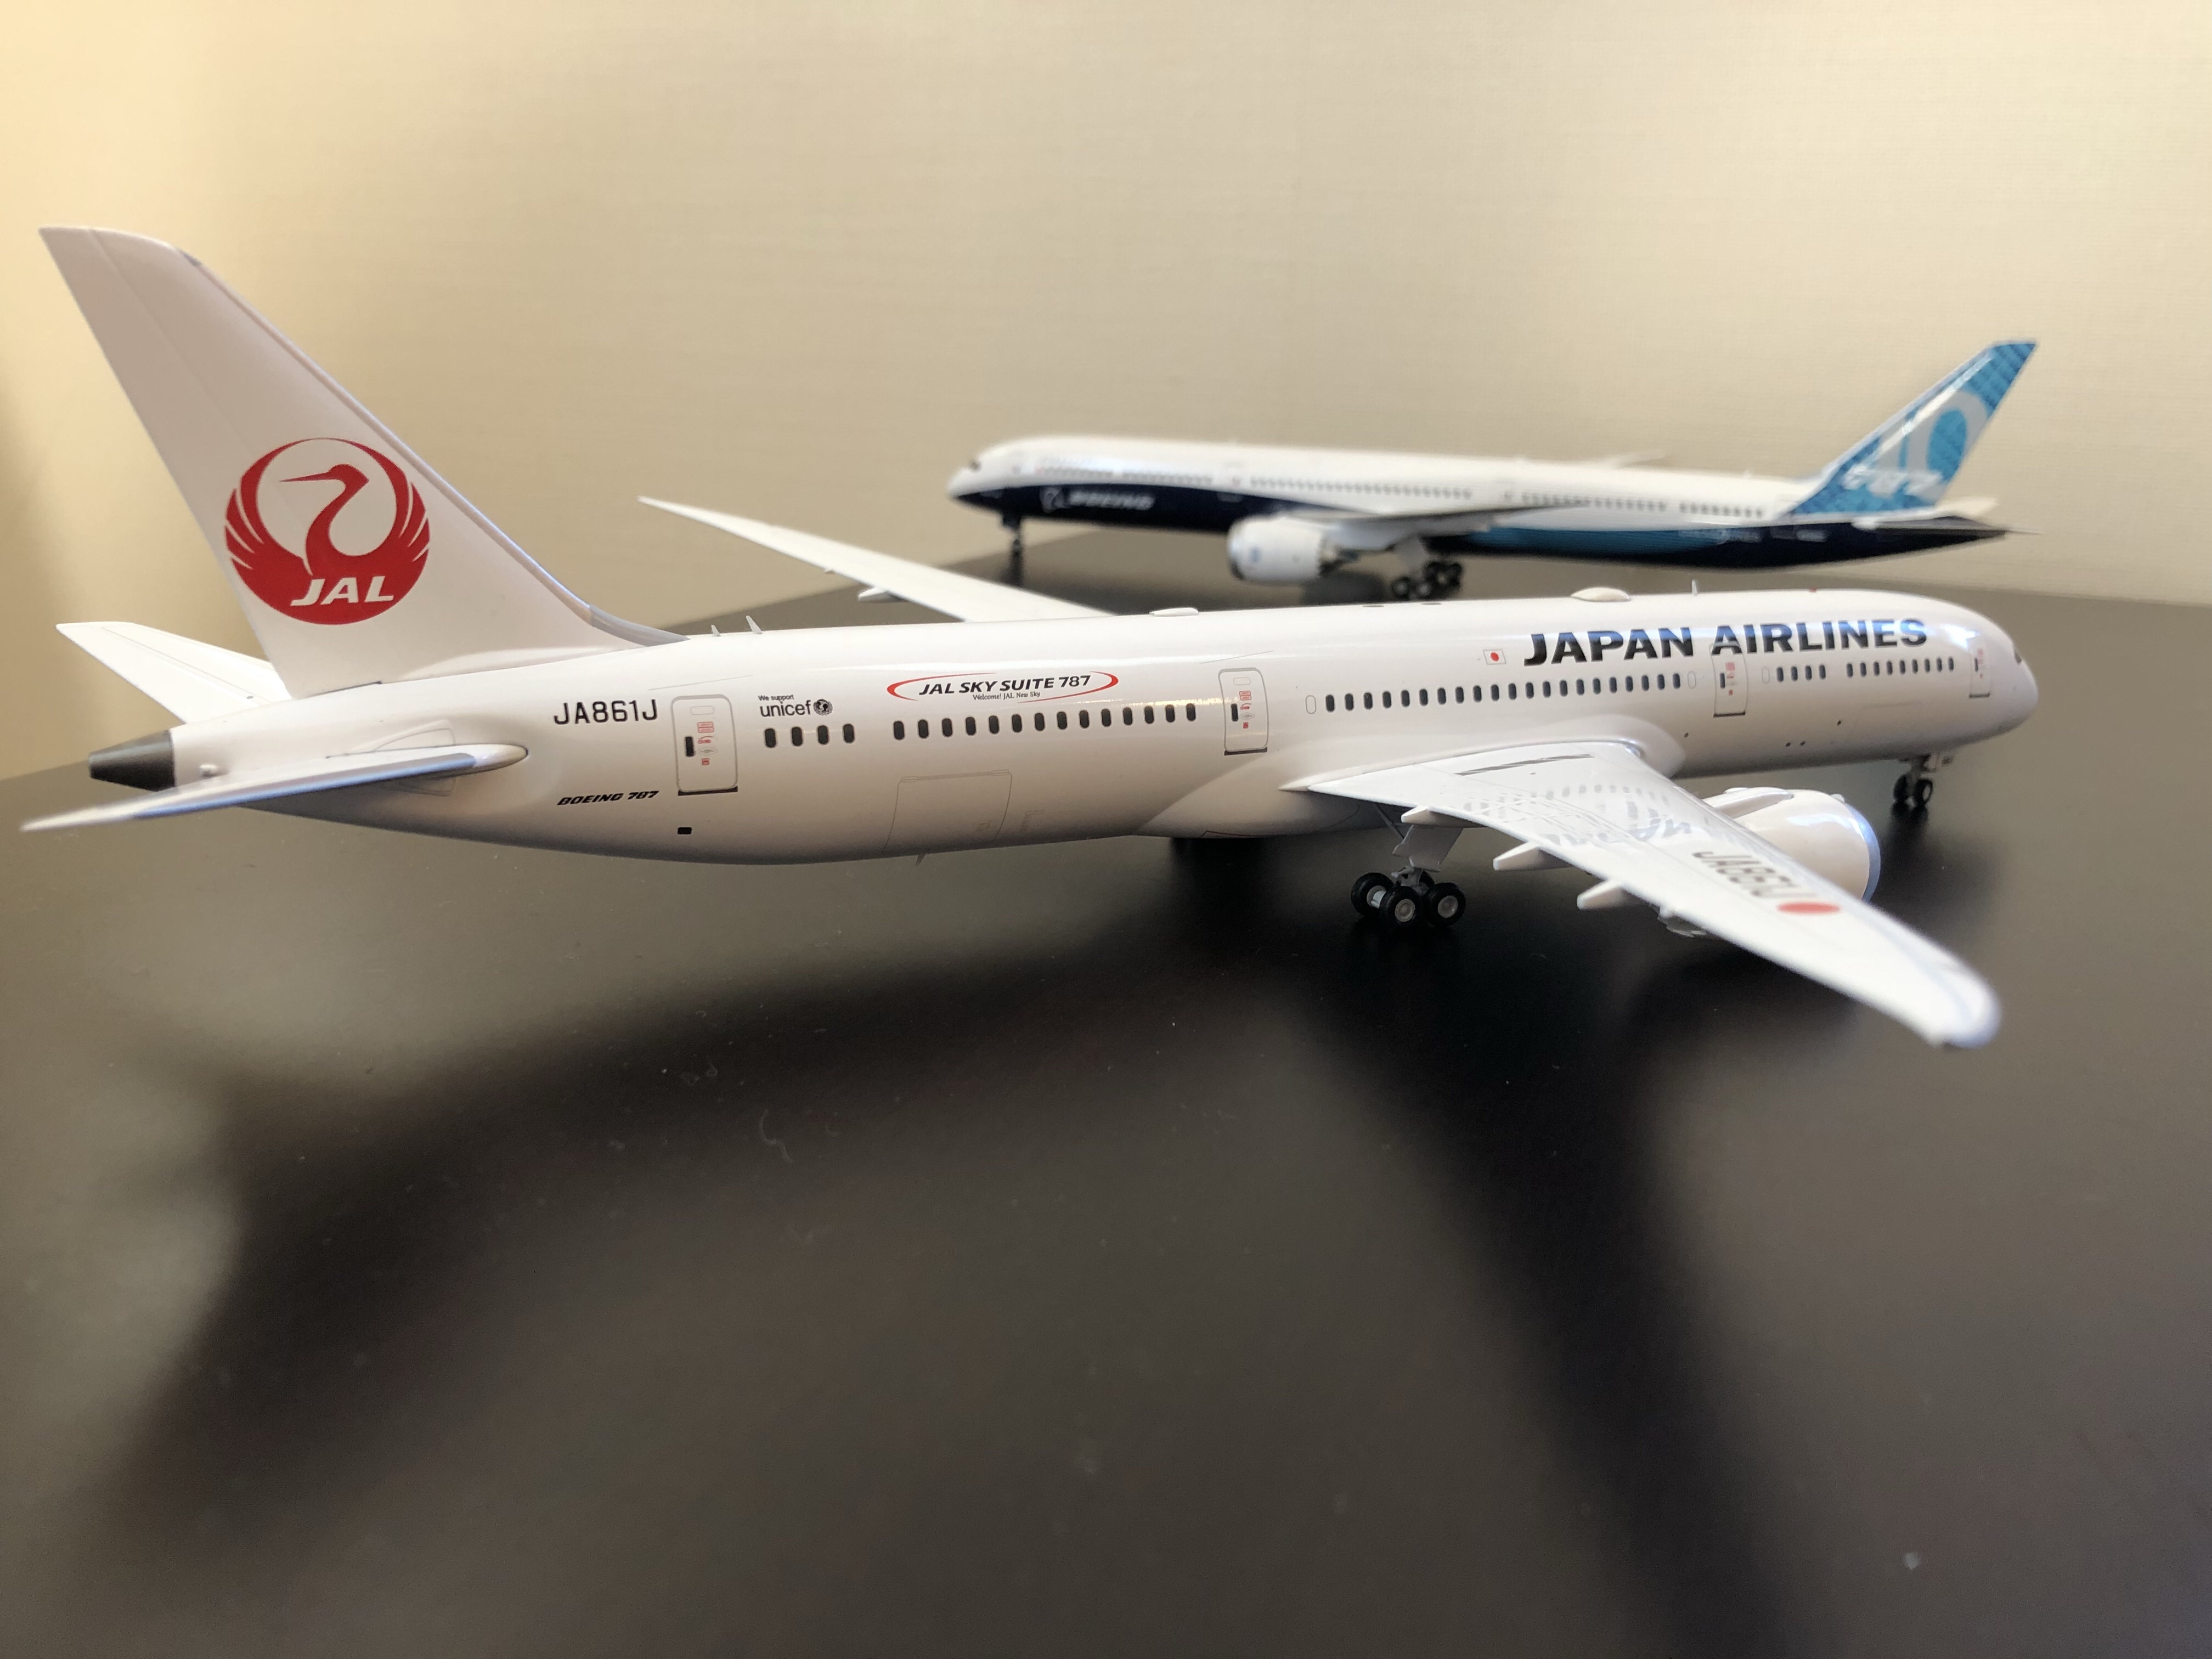 JAL  1: JAJ, JAL Sky Suite – シアトルセネカ通り#5